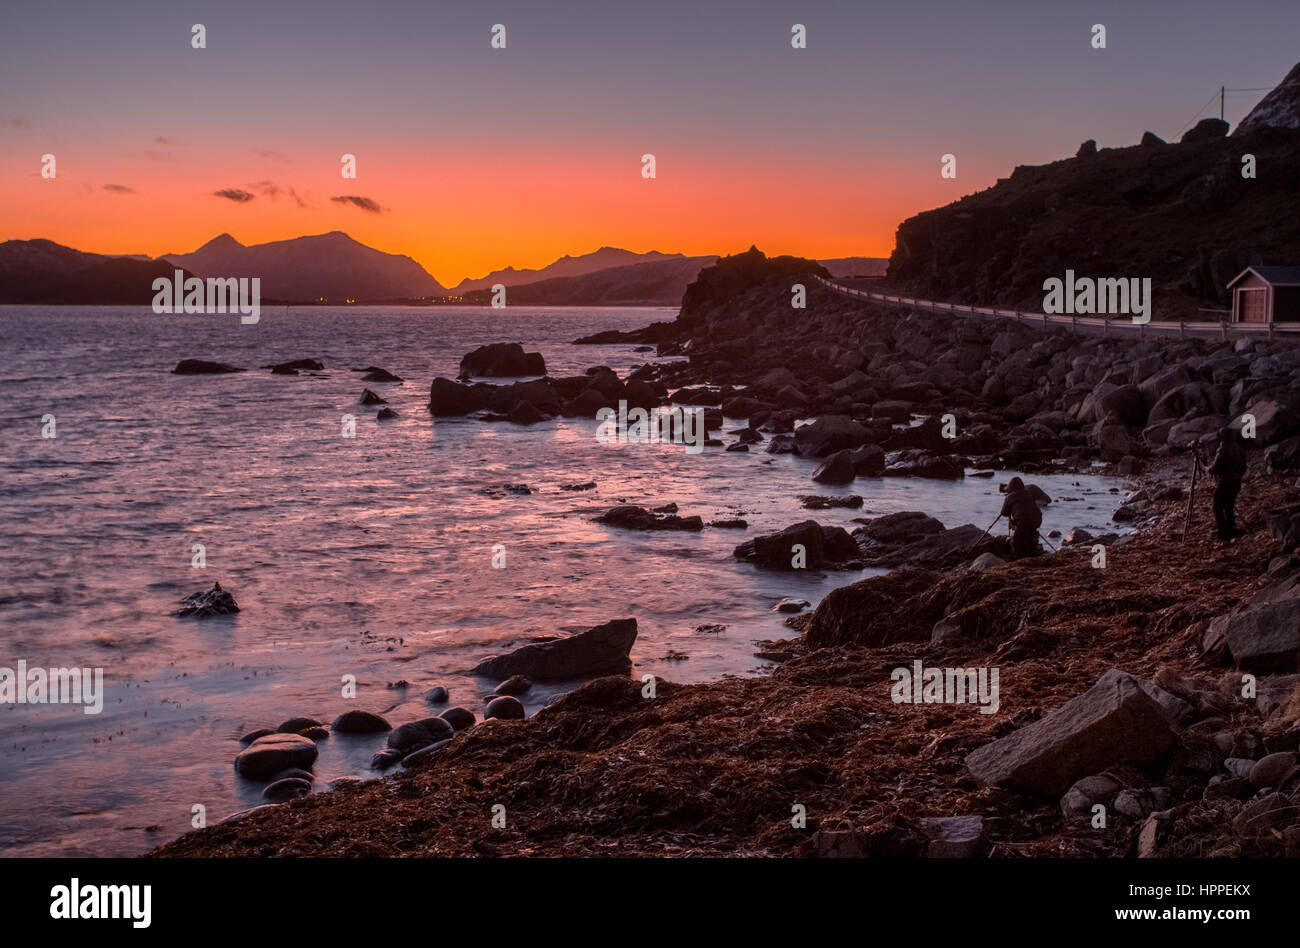 Flakstadoya am Meer, Lofoten Inseln, Norwegen, Europa Stockfoto